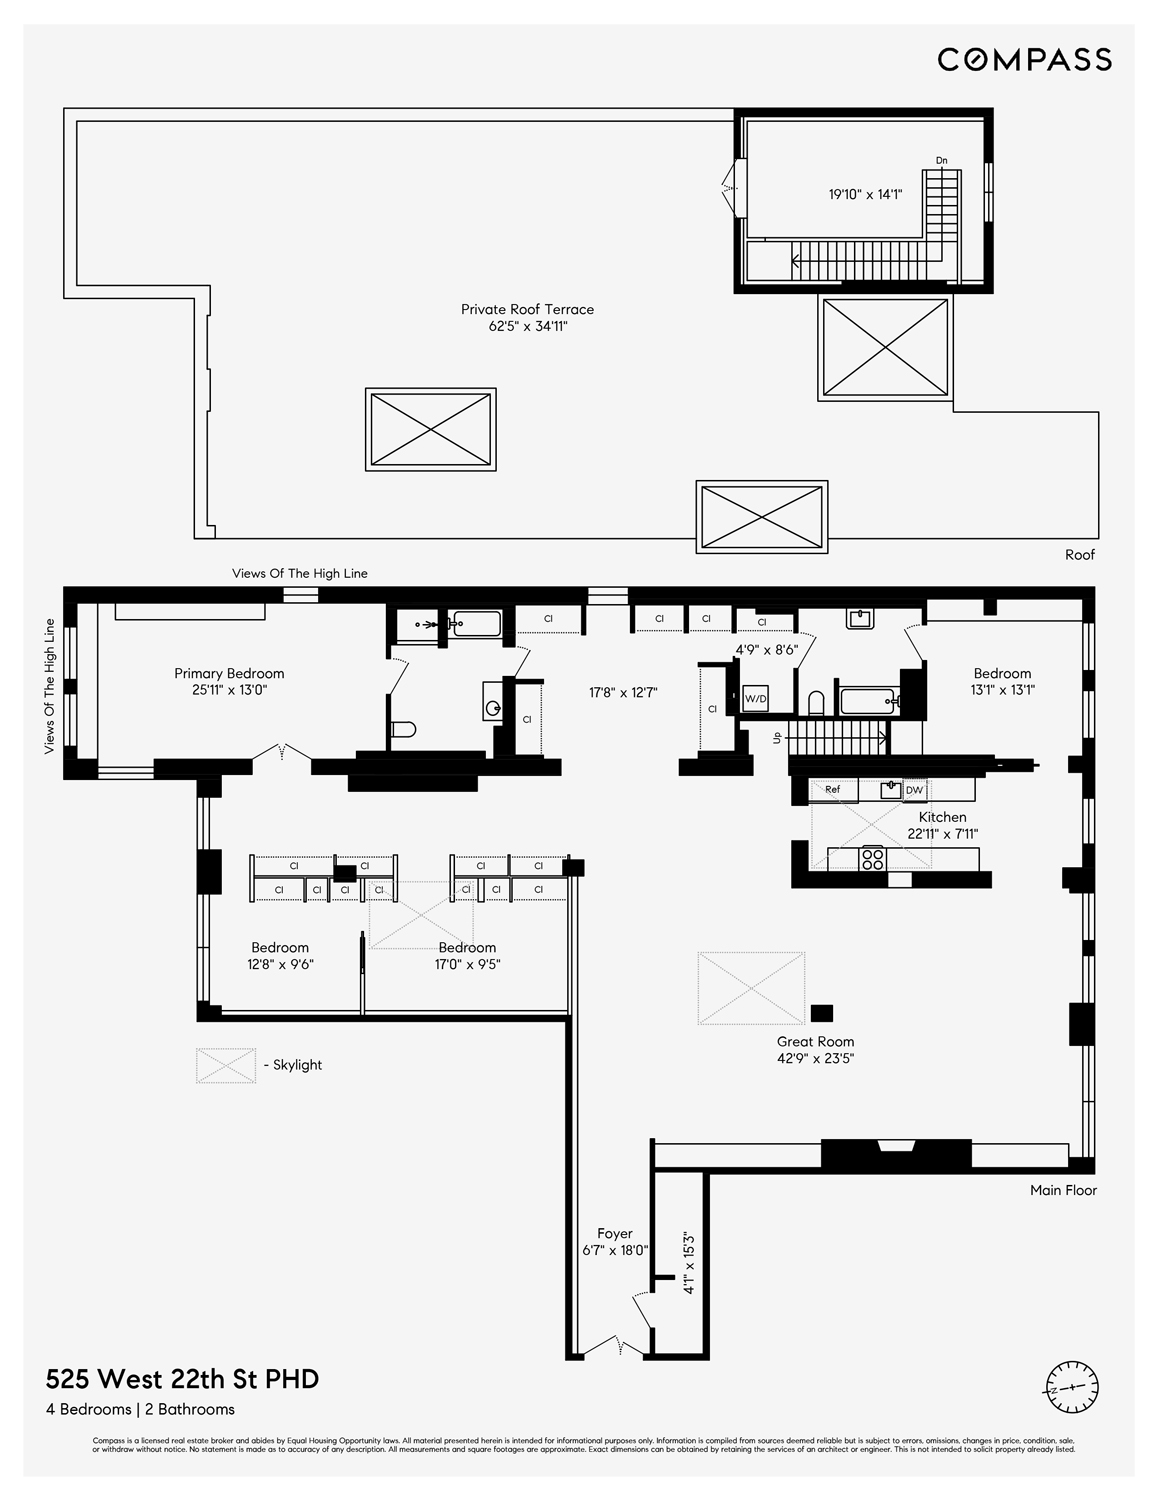 Floorplan for 525 West 22nd Street, PHD